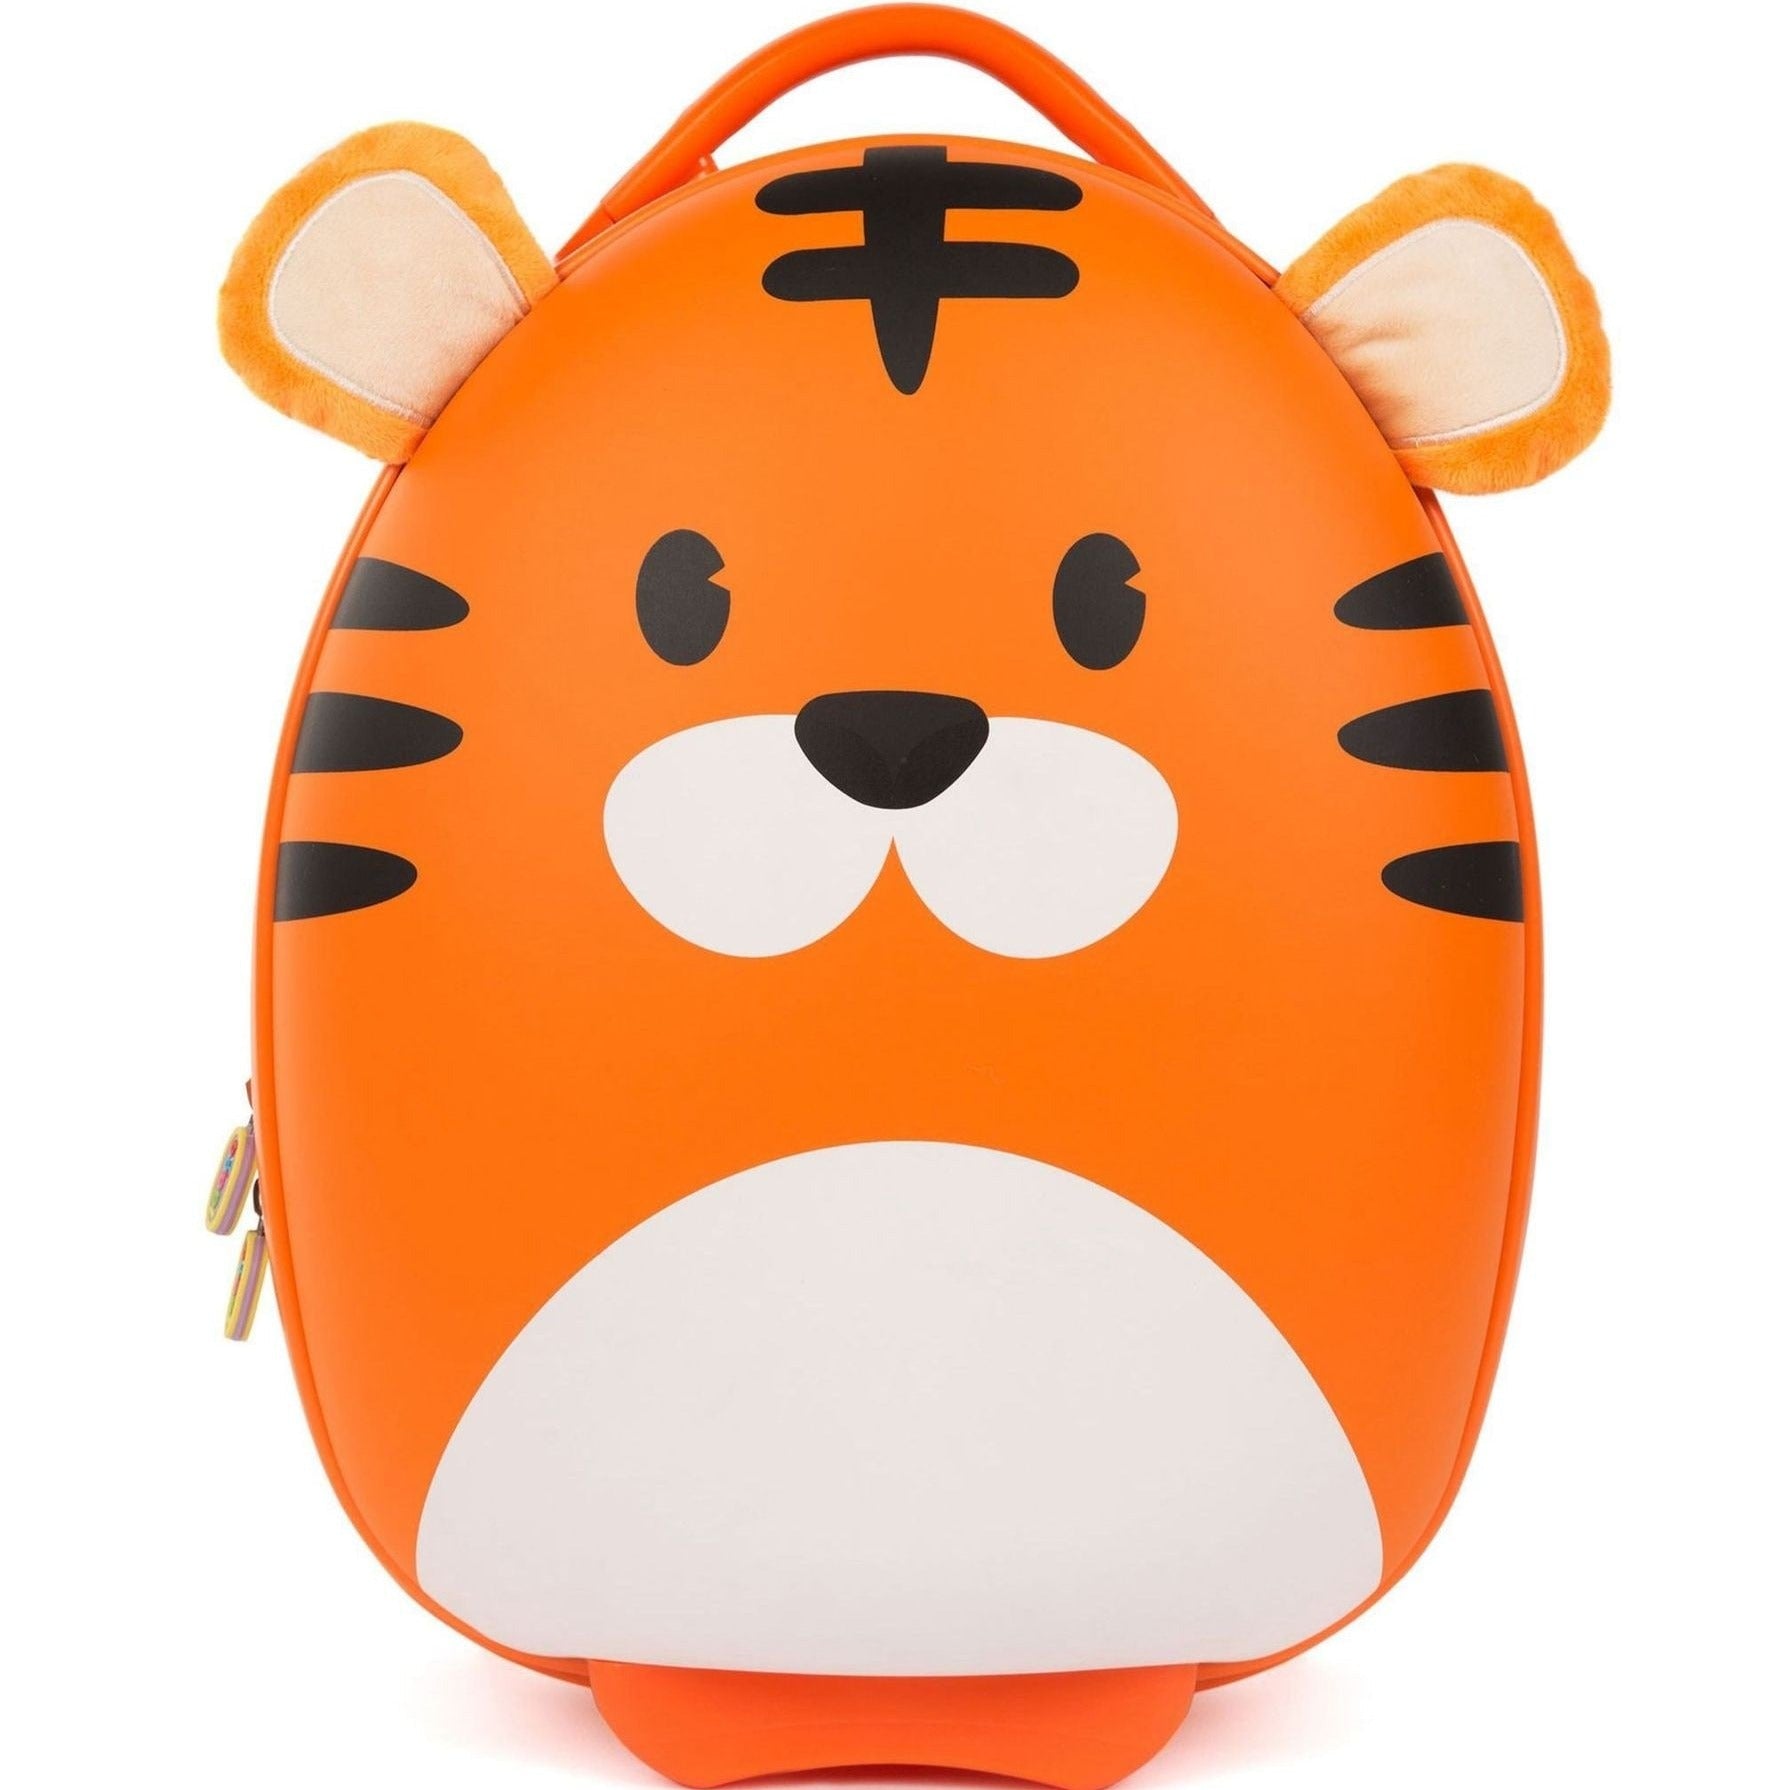 Boppi: Tiger suitcase for a child